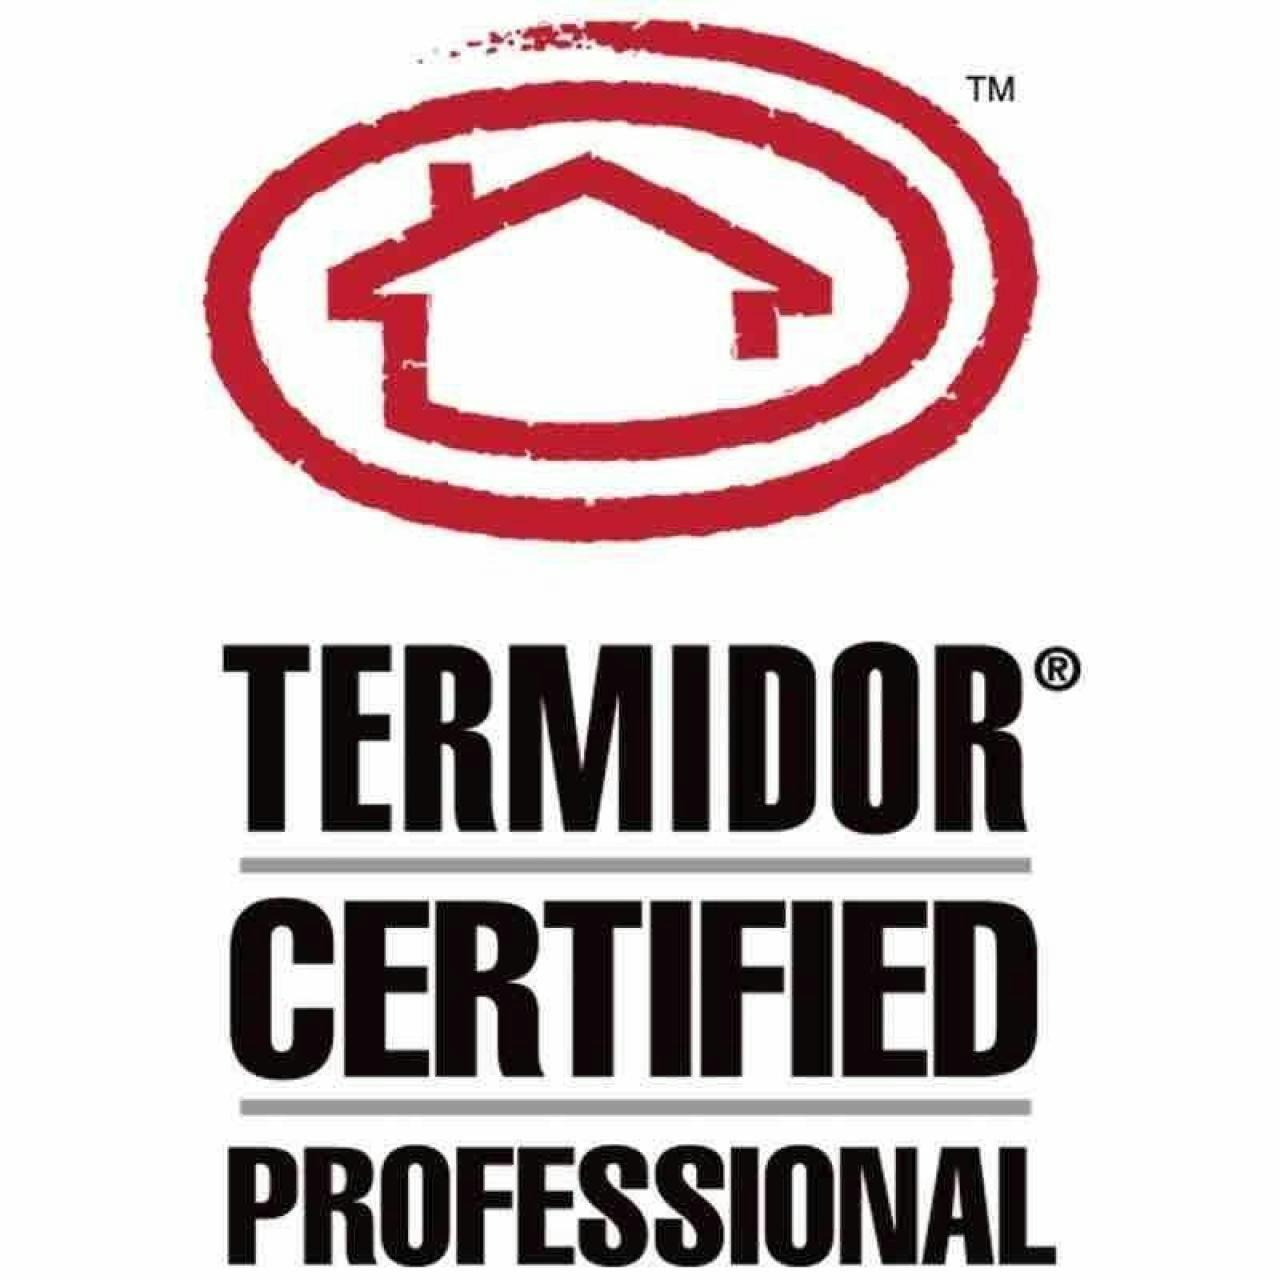 termidor certified professional